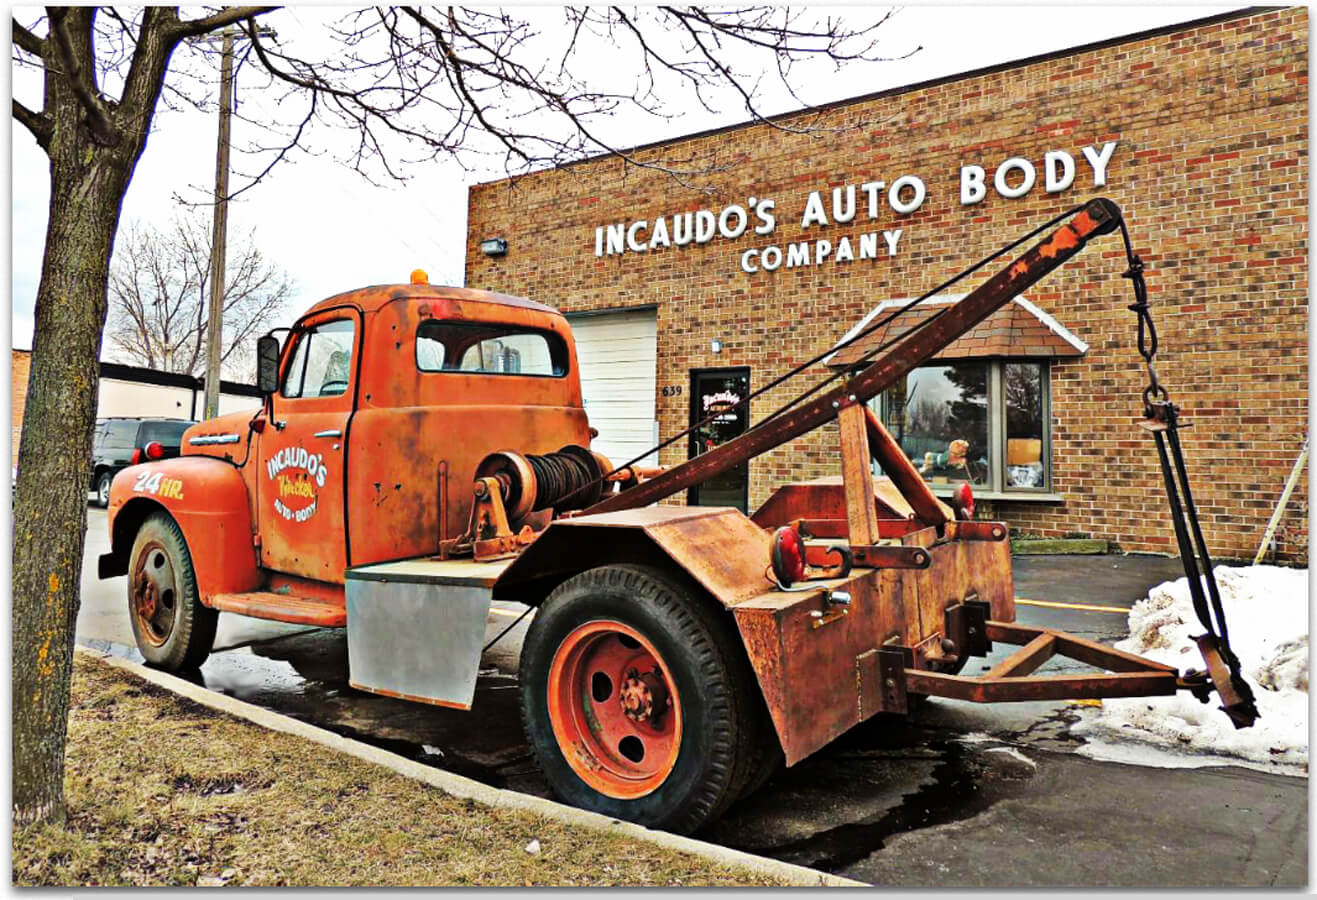 Incaudo's Auto Body